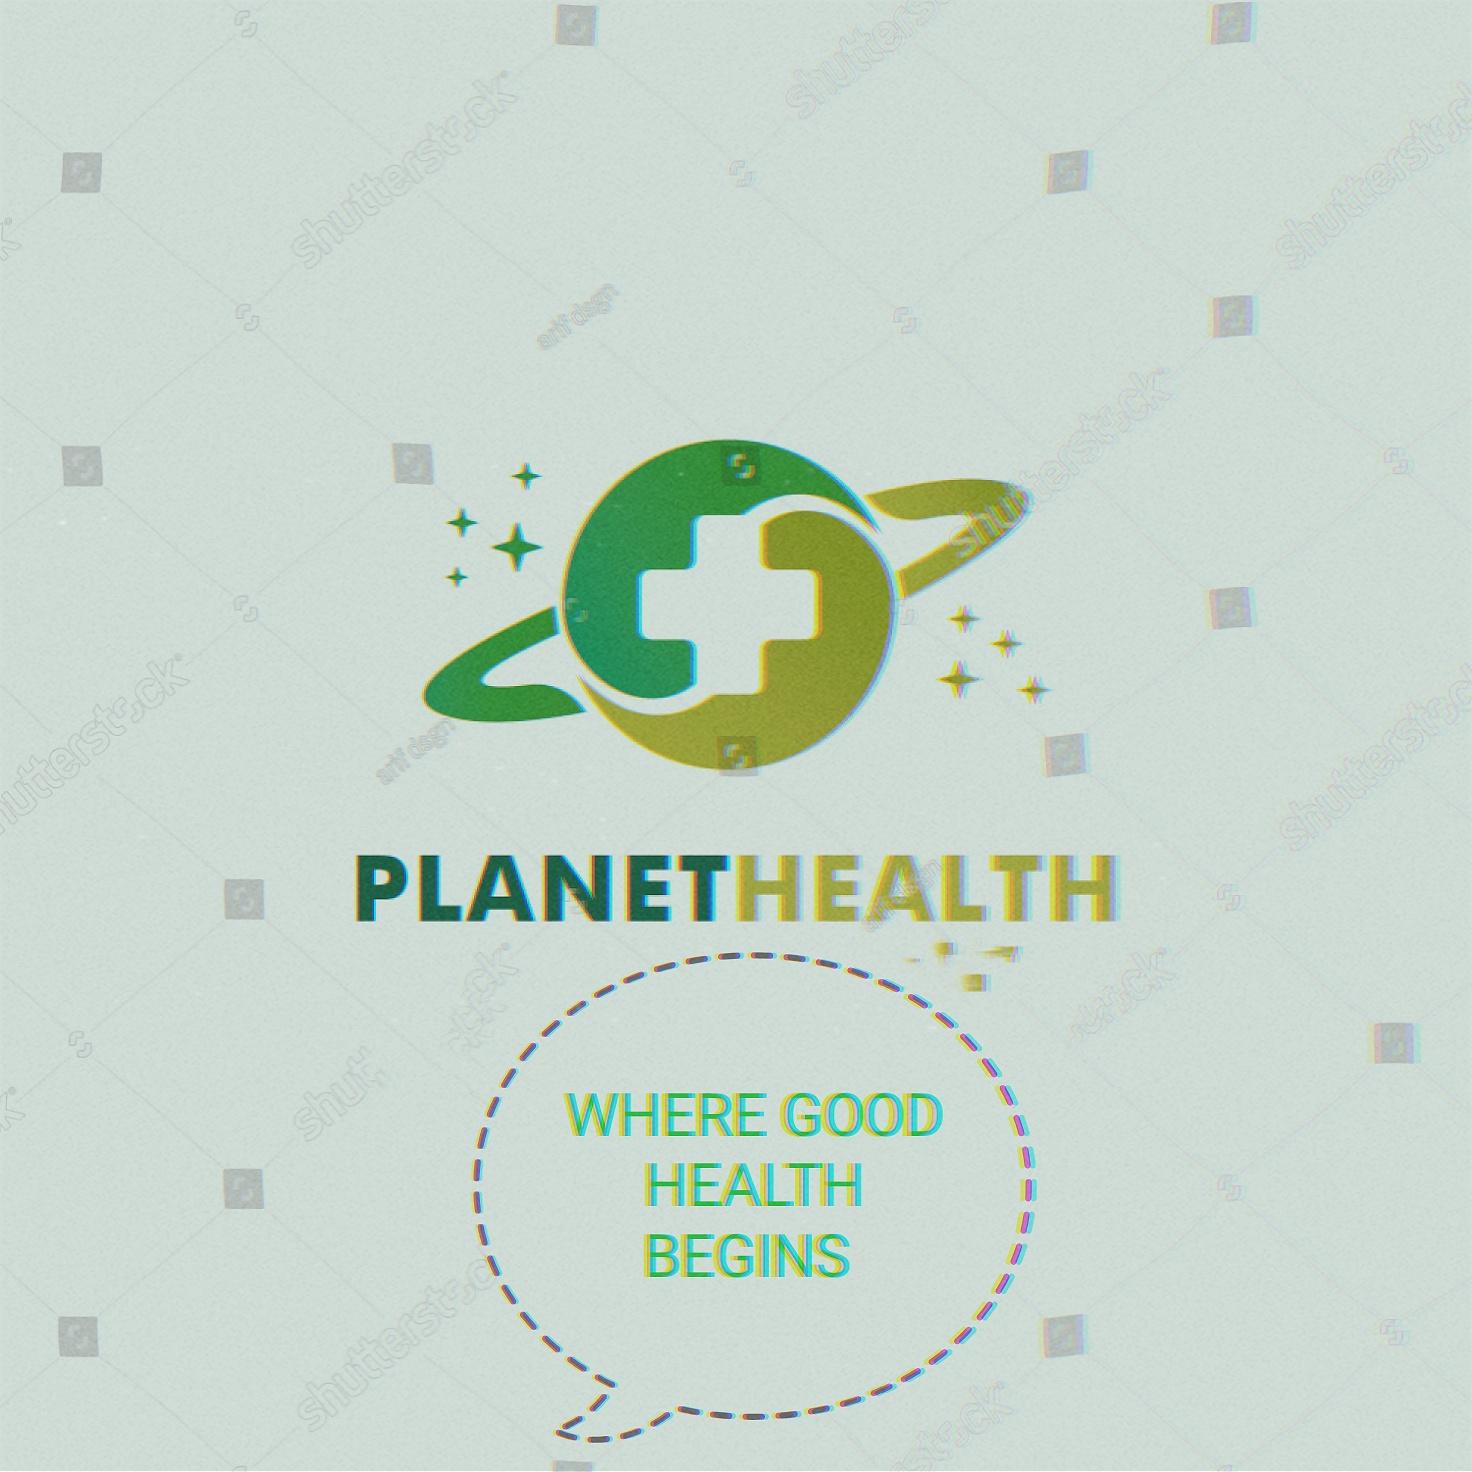 PLANET HEALTH